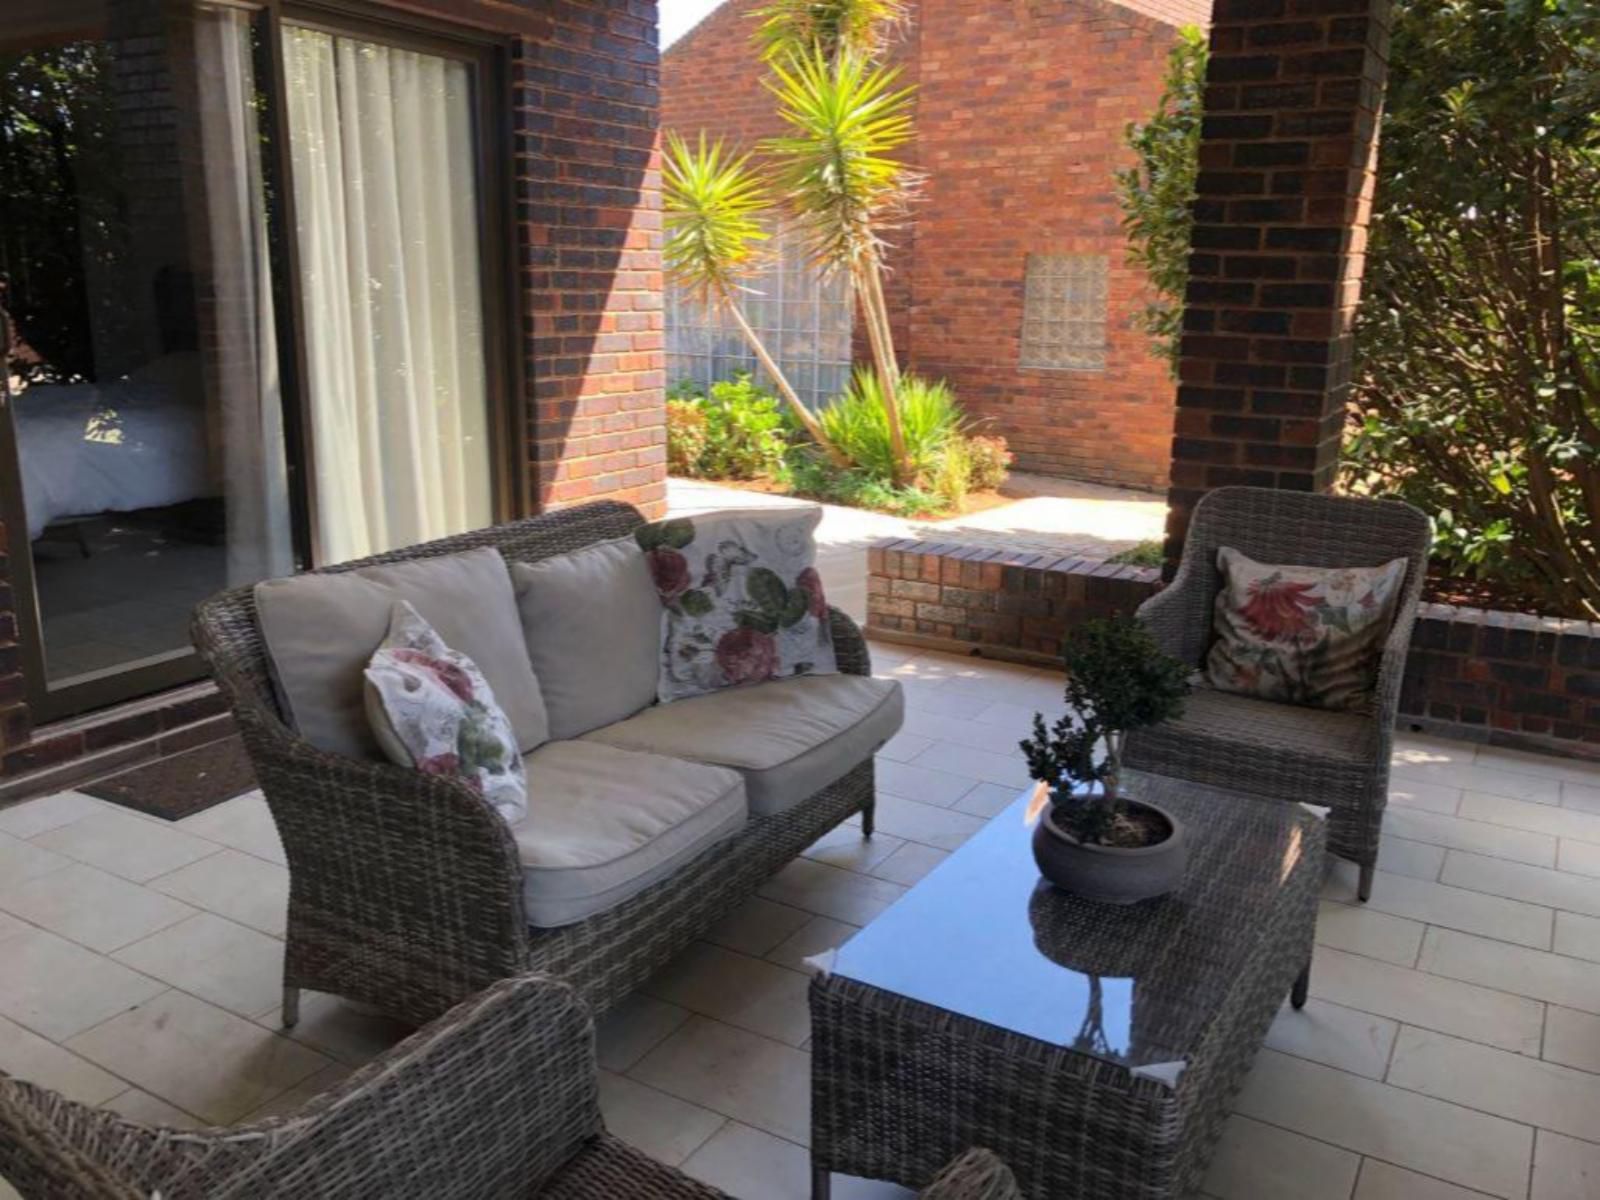 Eliora Randfontein Gauteng South Africa House, Building, Architecture, Brick Texture, Texture, Garden, Nature, Plant, Living Room